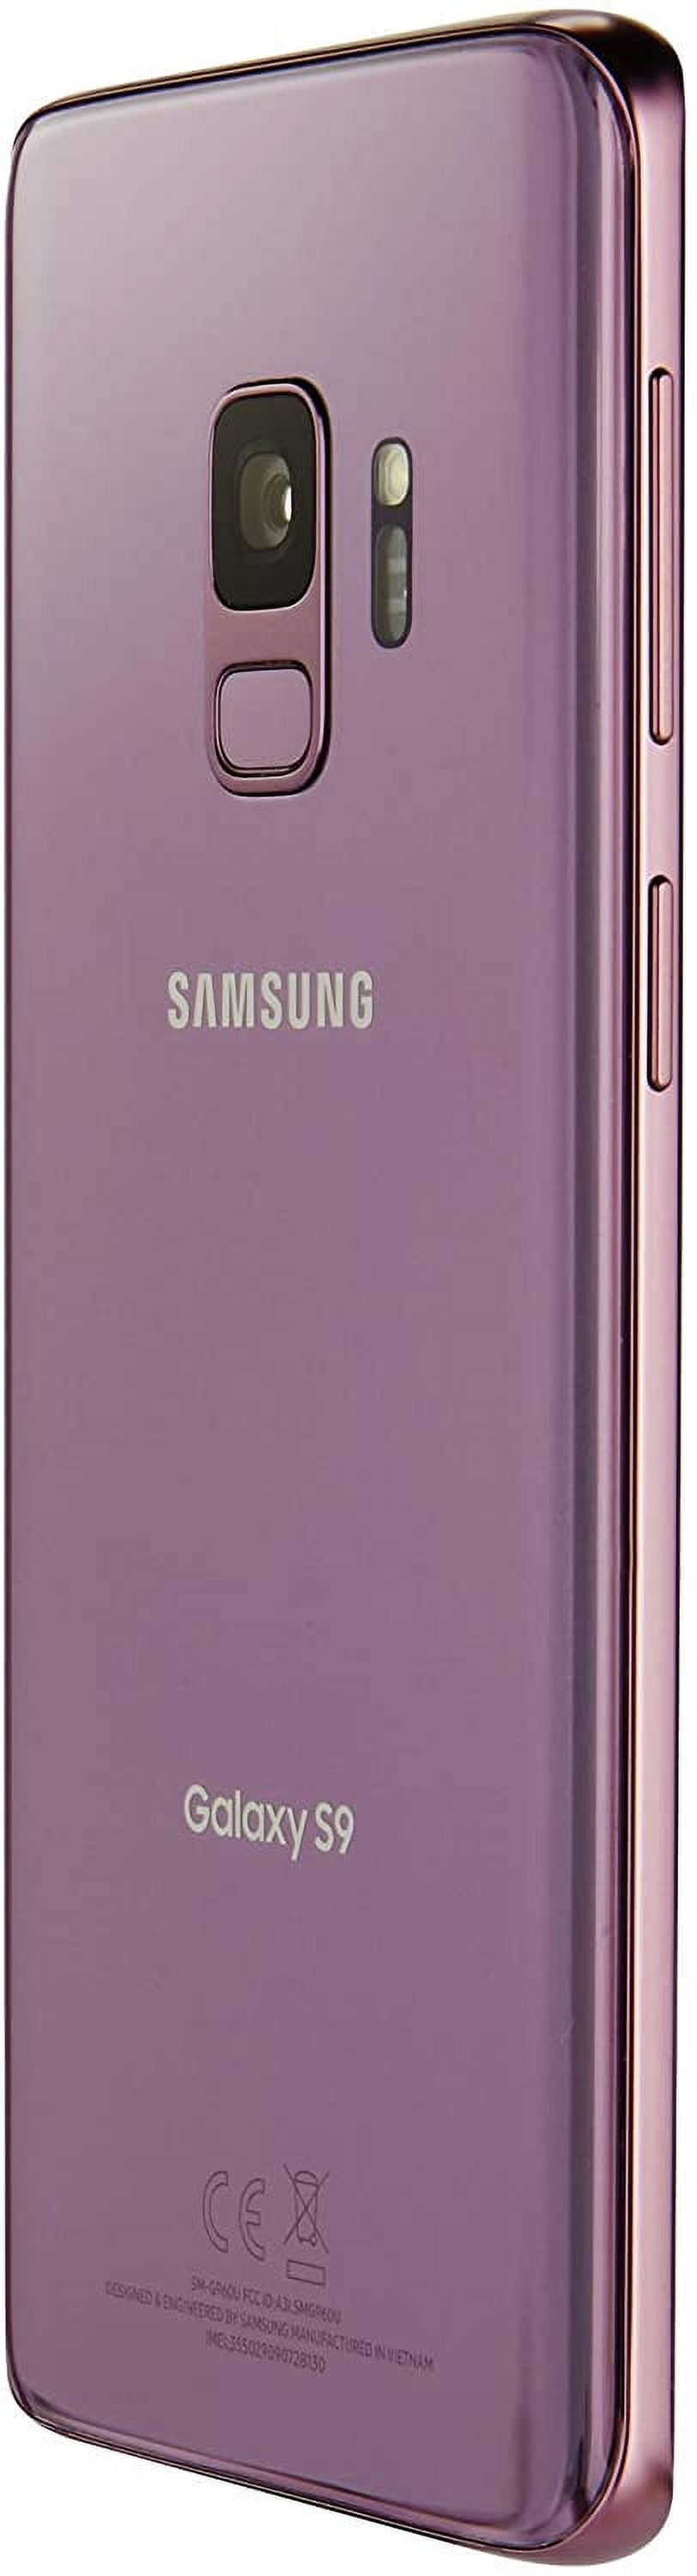 SAMSUNG Galaxy S9 Factory Unlocked Smartphone 64GB - Coral Blue - US  Version [SM-G960UZBAXAA]